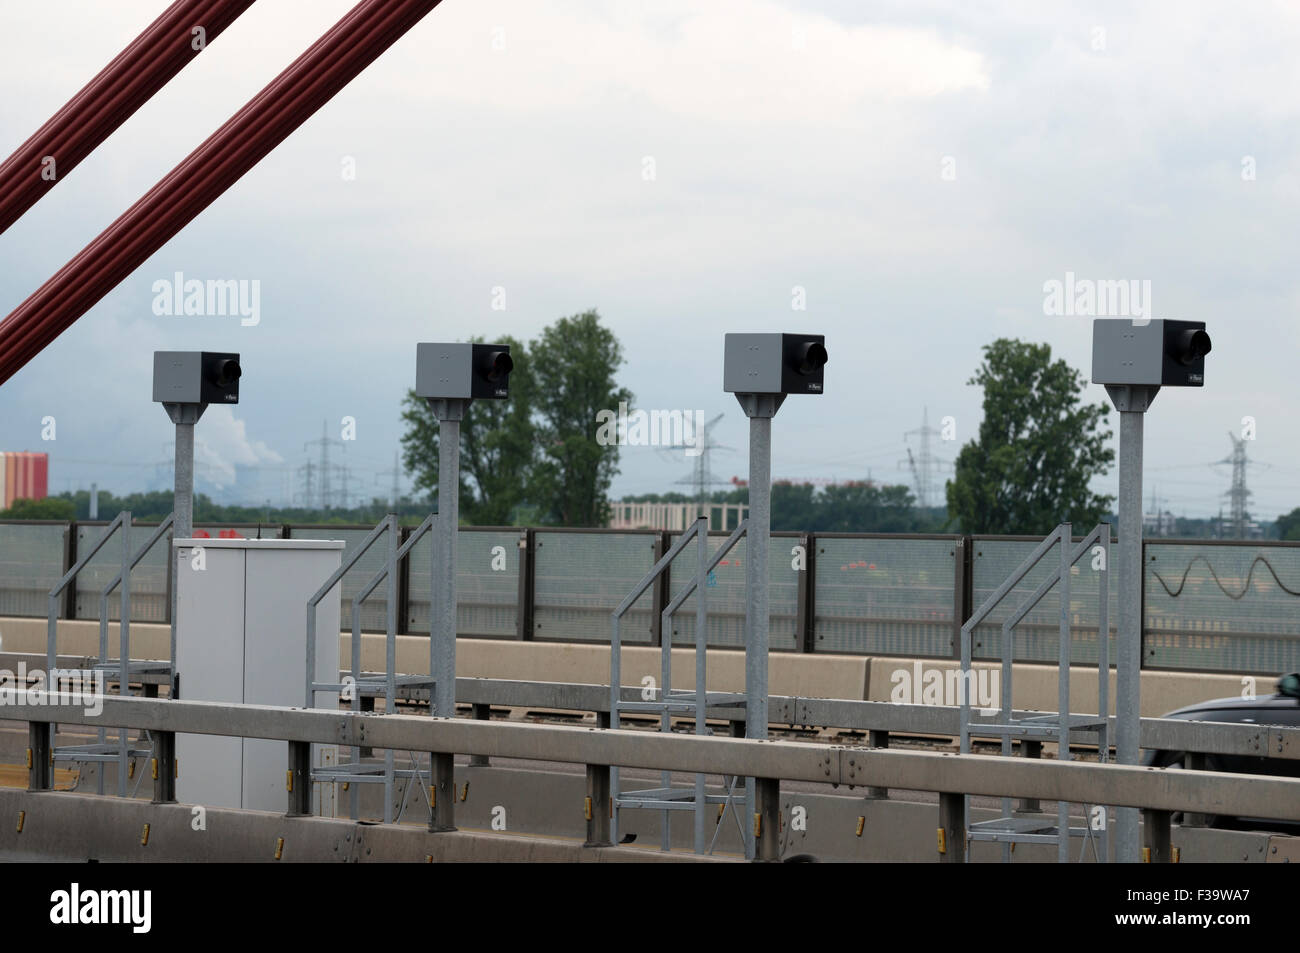 Speed cameras on the A1 autobahn bridge crossing the river Rhine, Leverkusen, Germany. Stock Photo